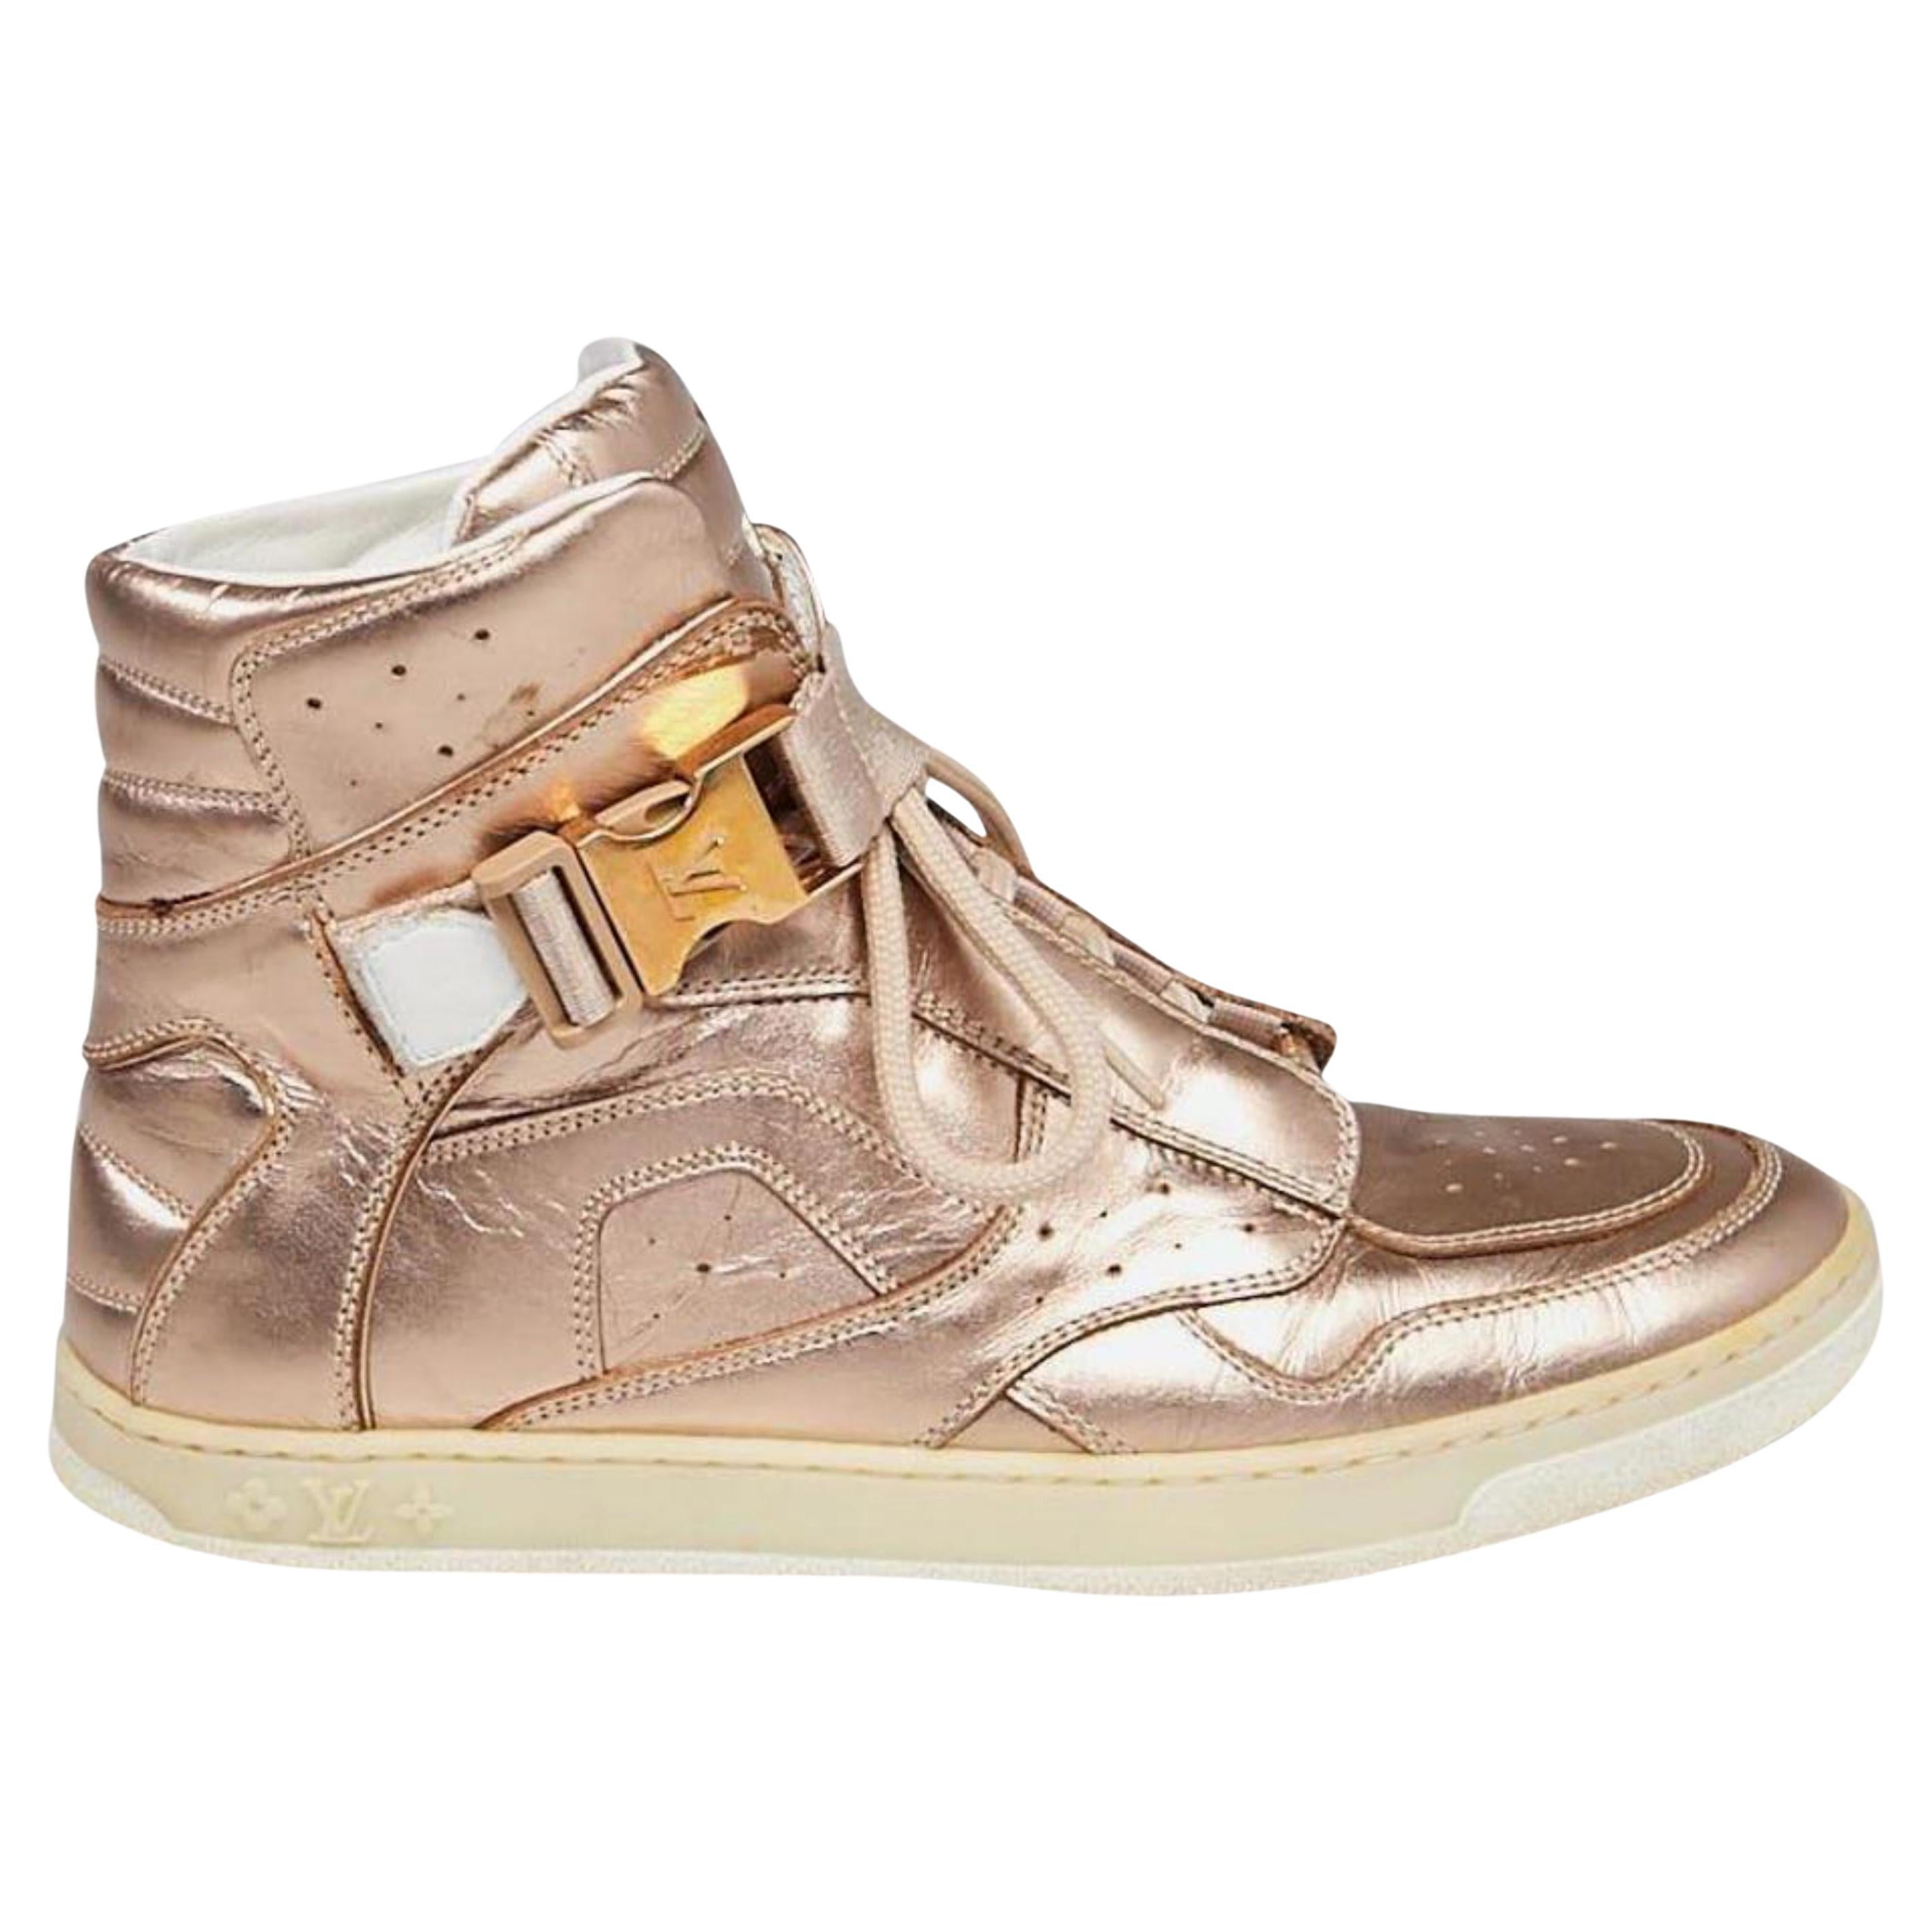 Louis Vuitton Size 36 Gold Metallic High Top Sneaker 1223lv15 For Sale